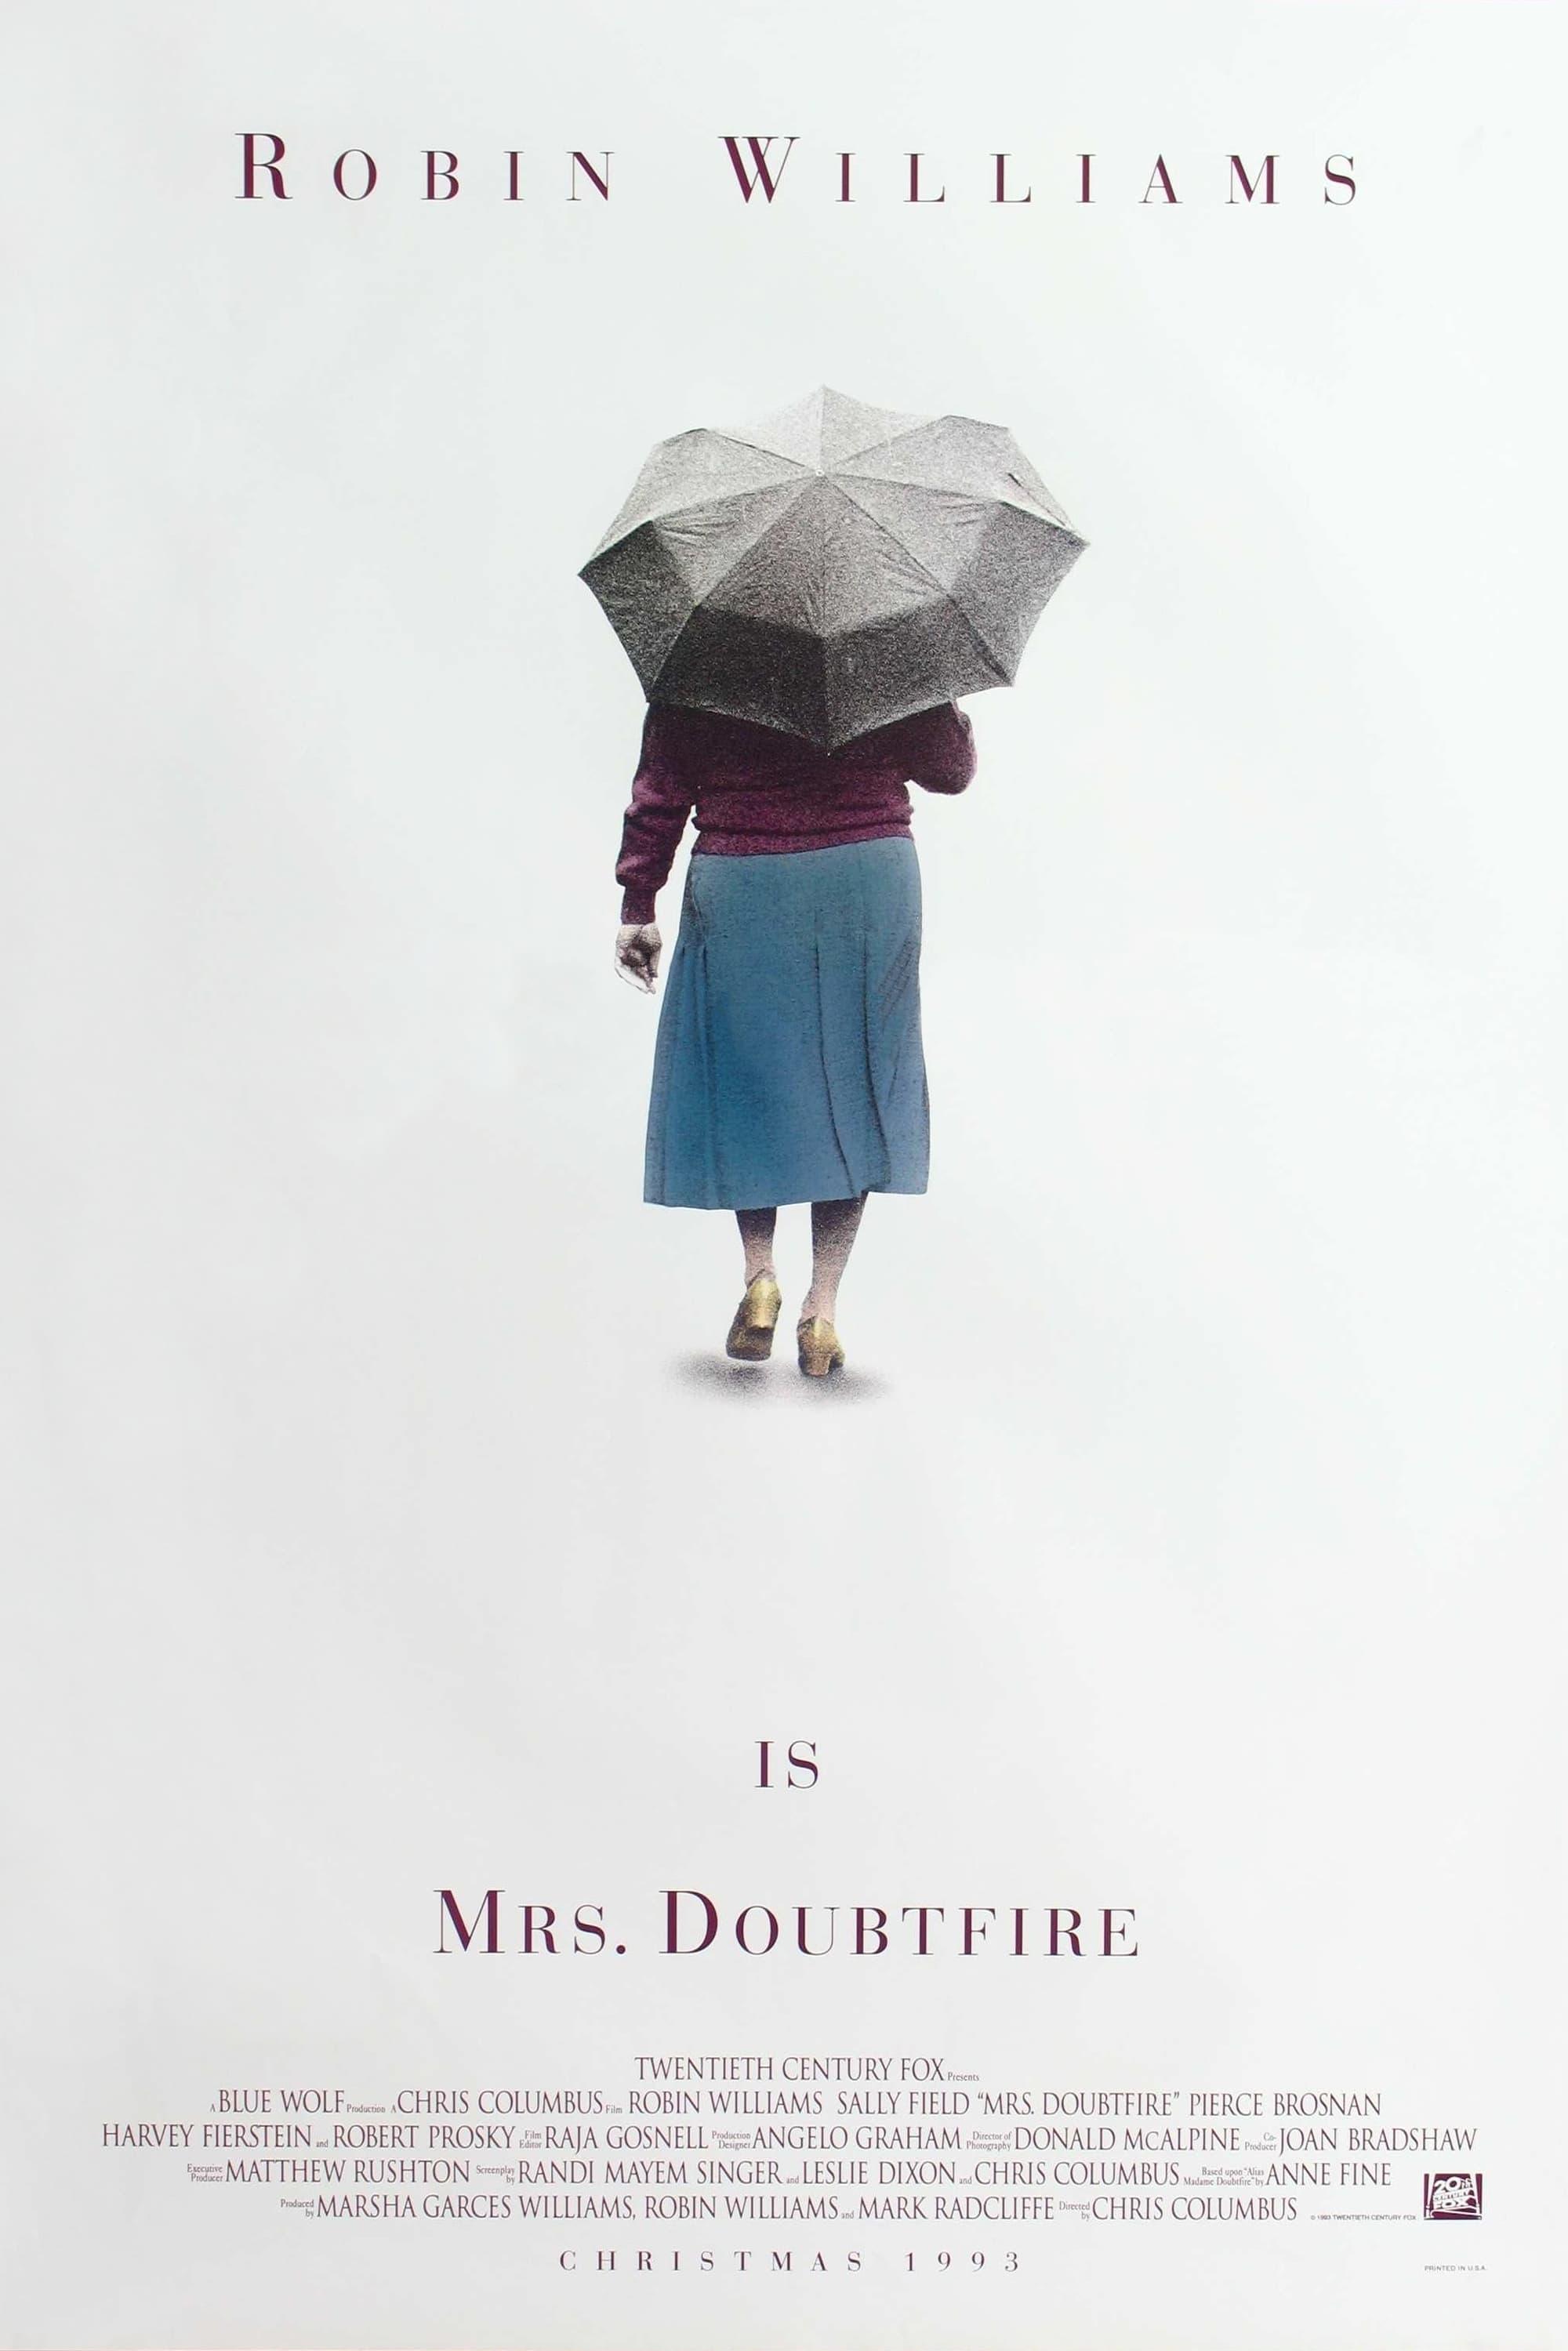 Mrs. Doubtfire poster